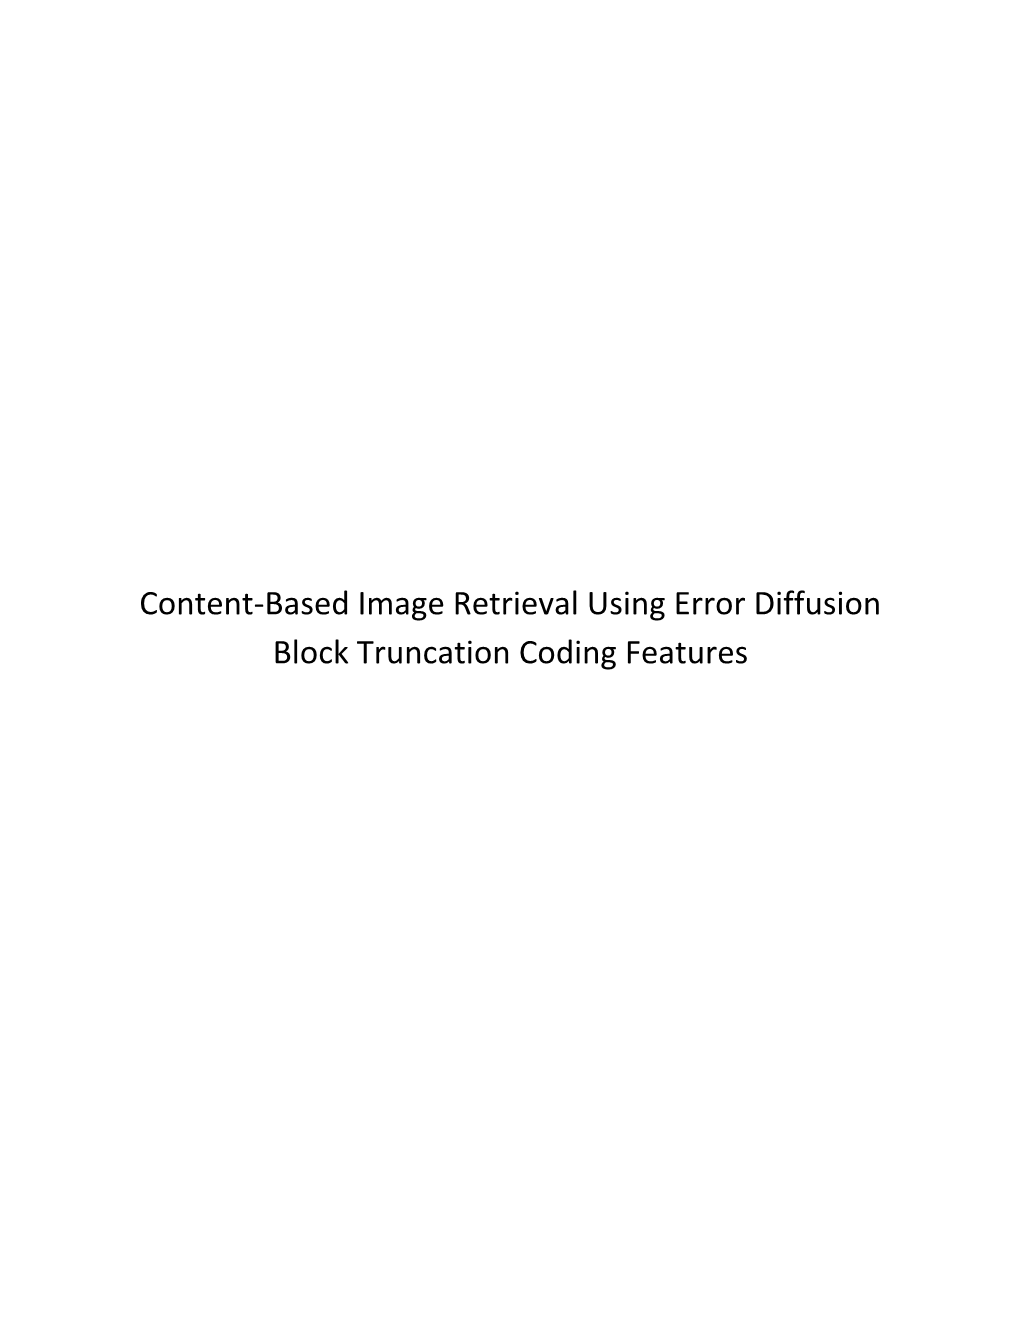 Content-Based Image Retrieval Using Error Diffusion Block Truncation Coding Features